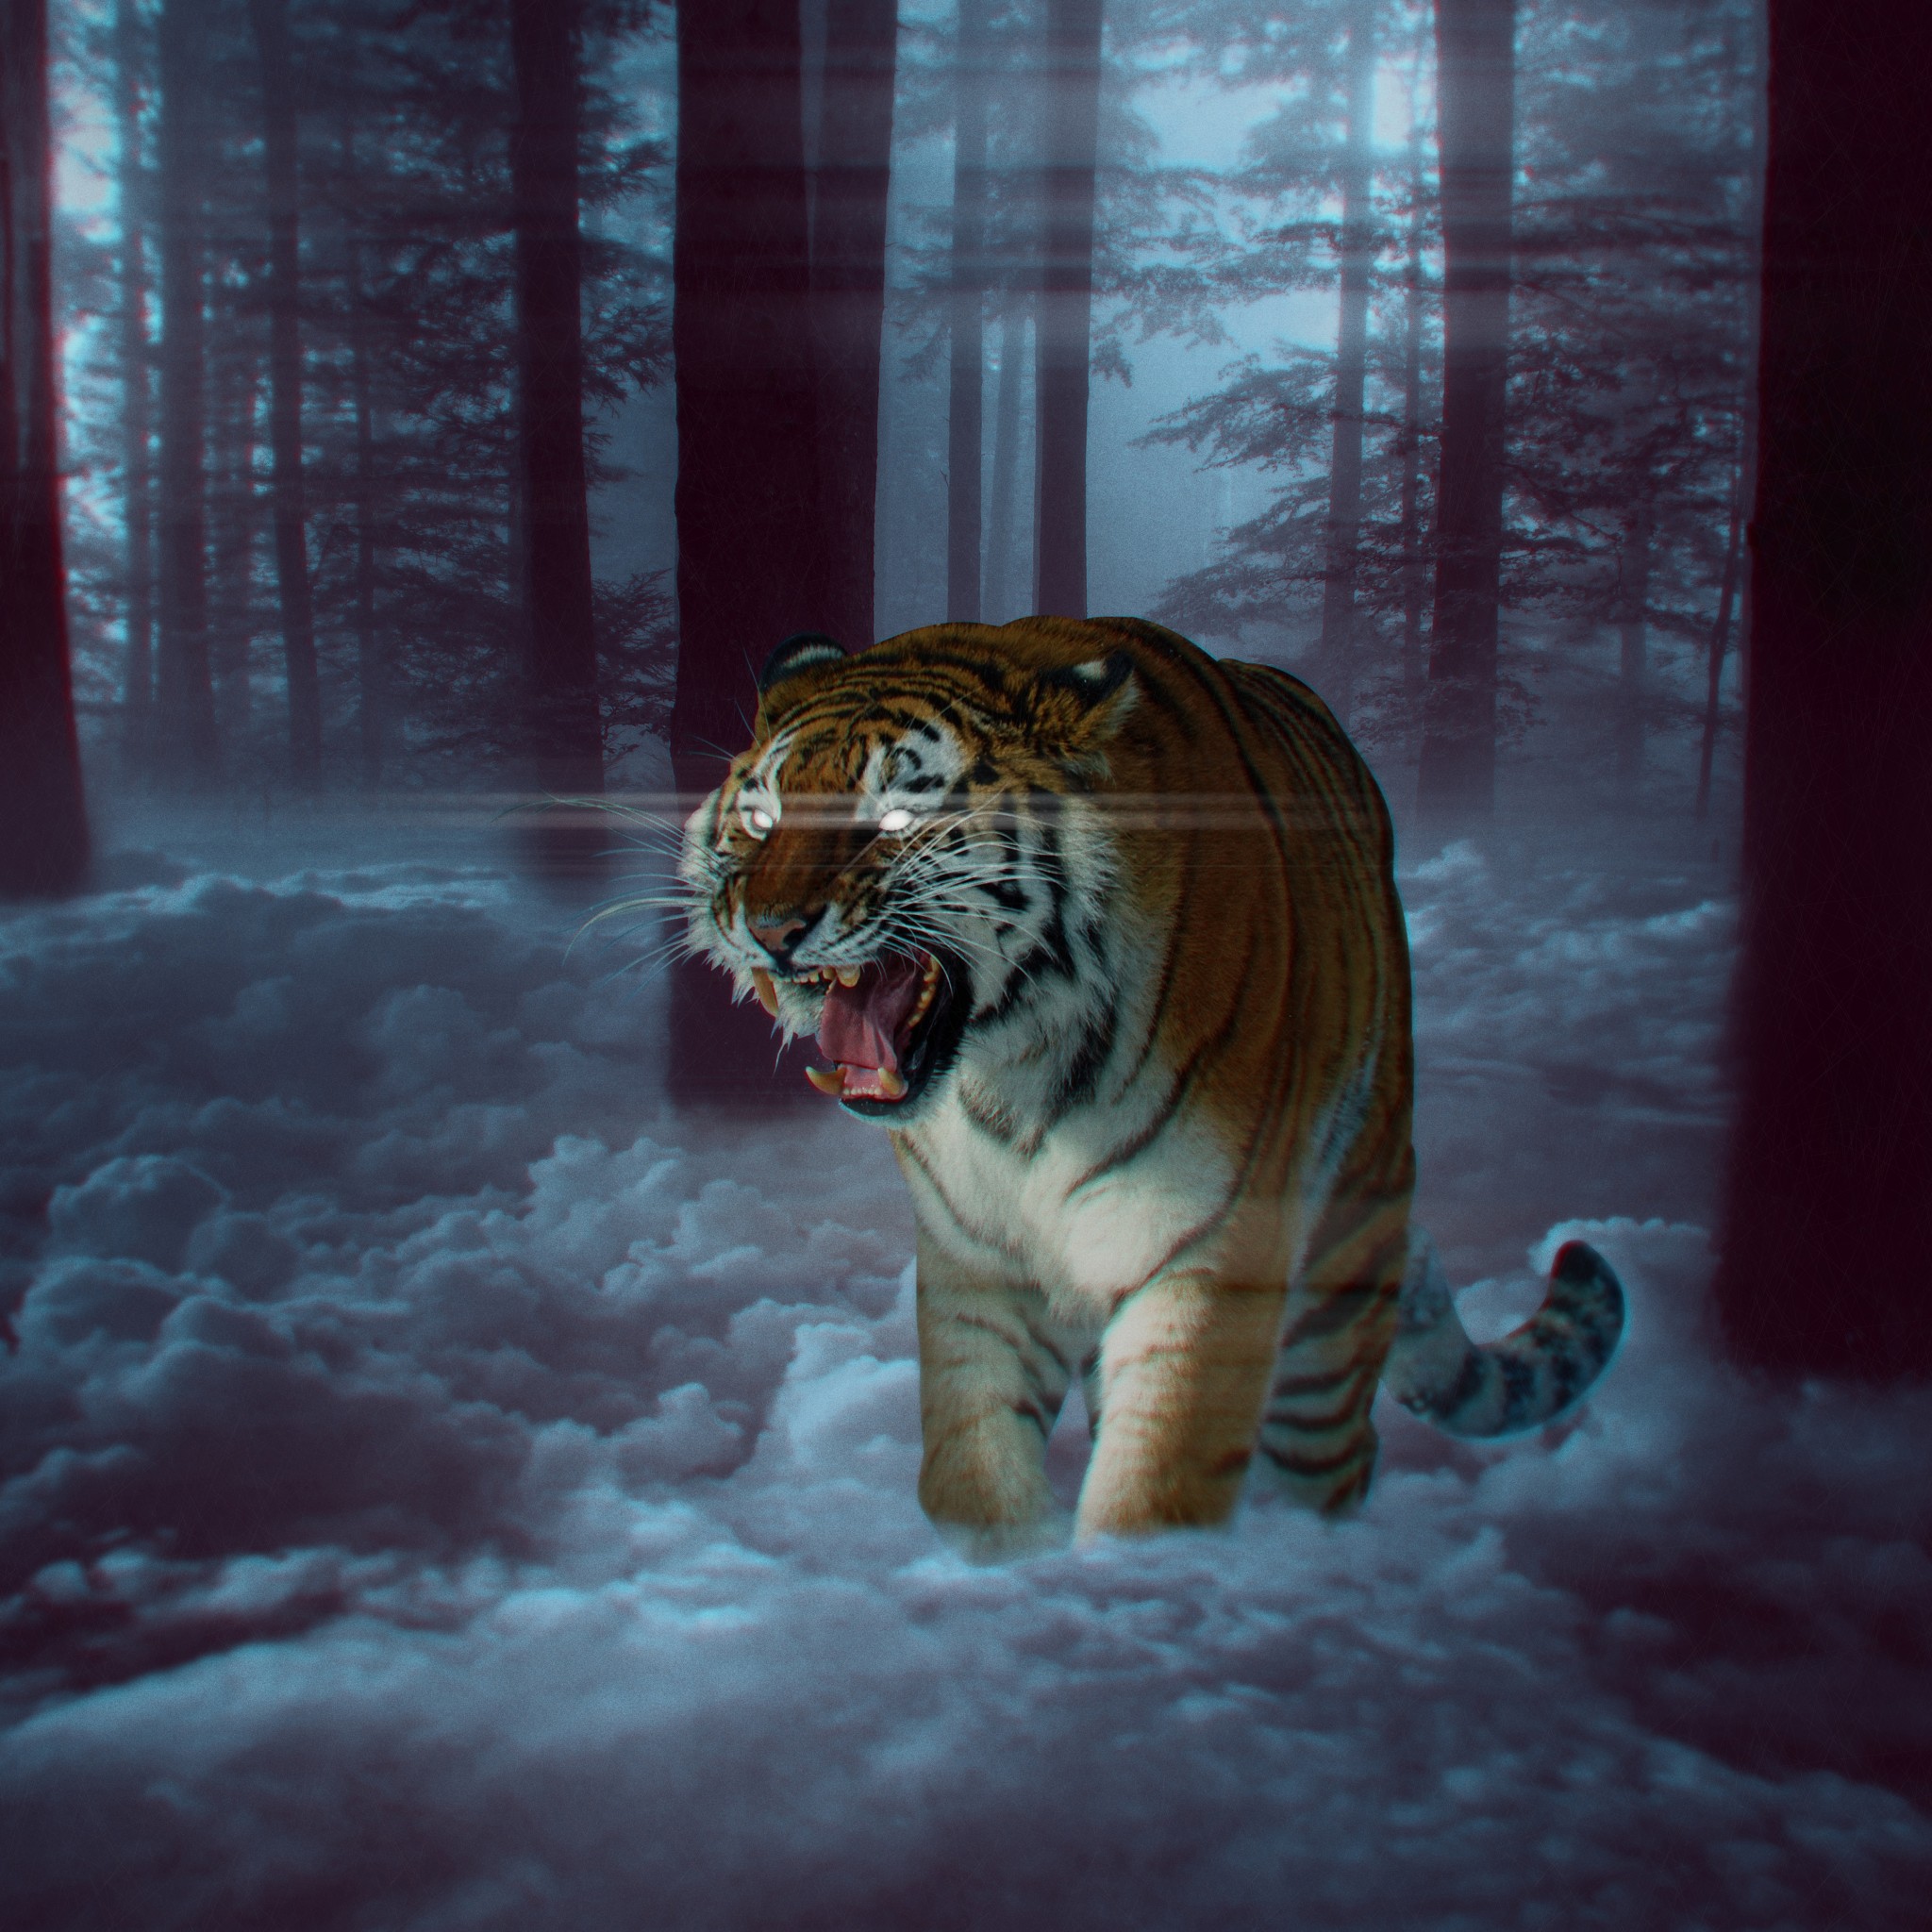 Tiger Fantasy Art Wallpaper - Animal Wallpaper Iphone Xs Max , HD Wallpaper & Backgrounds